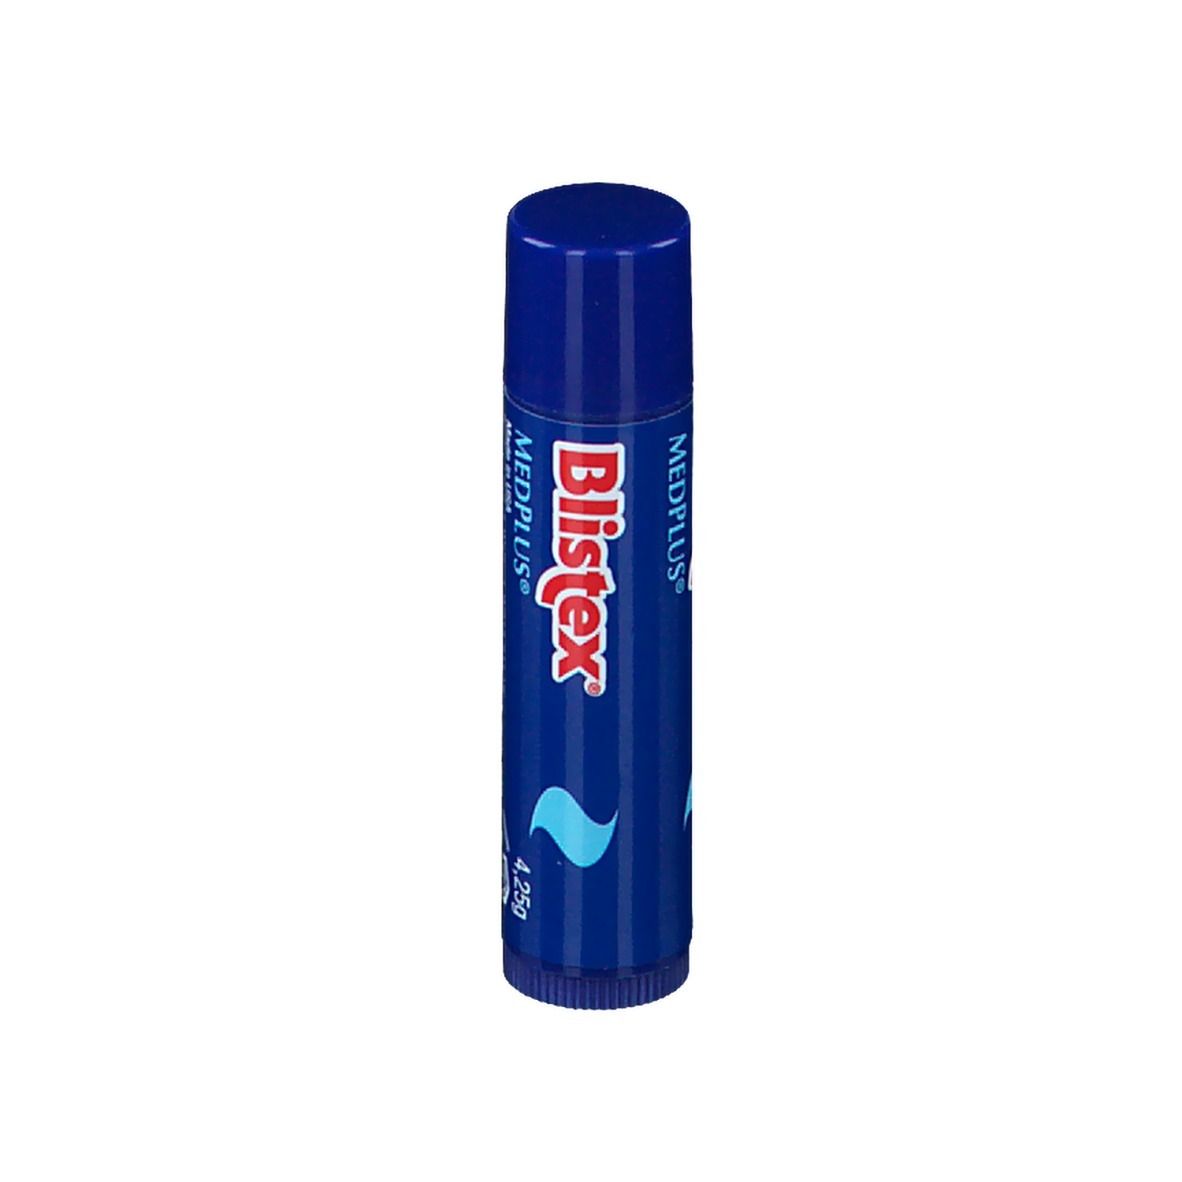 Blistex® MedPlus Stick